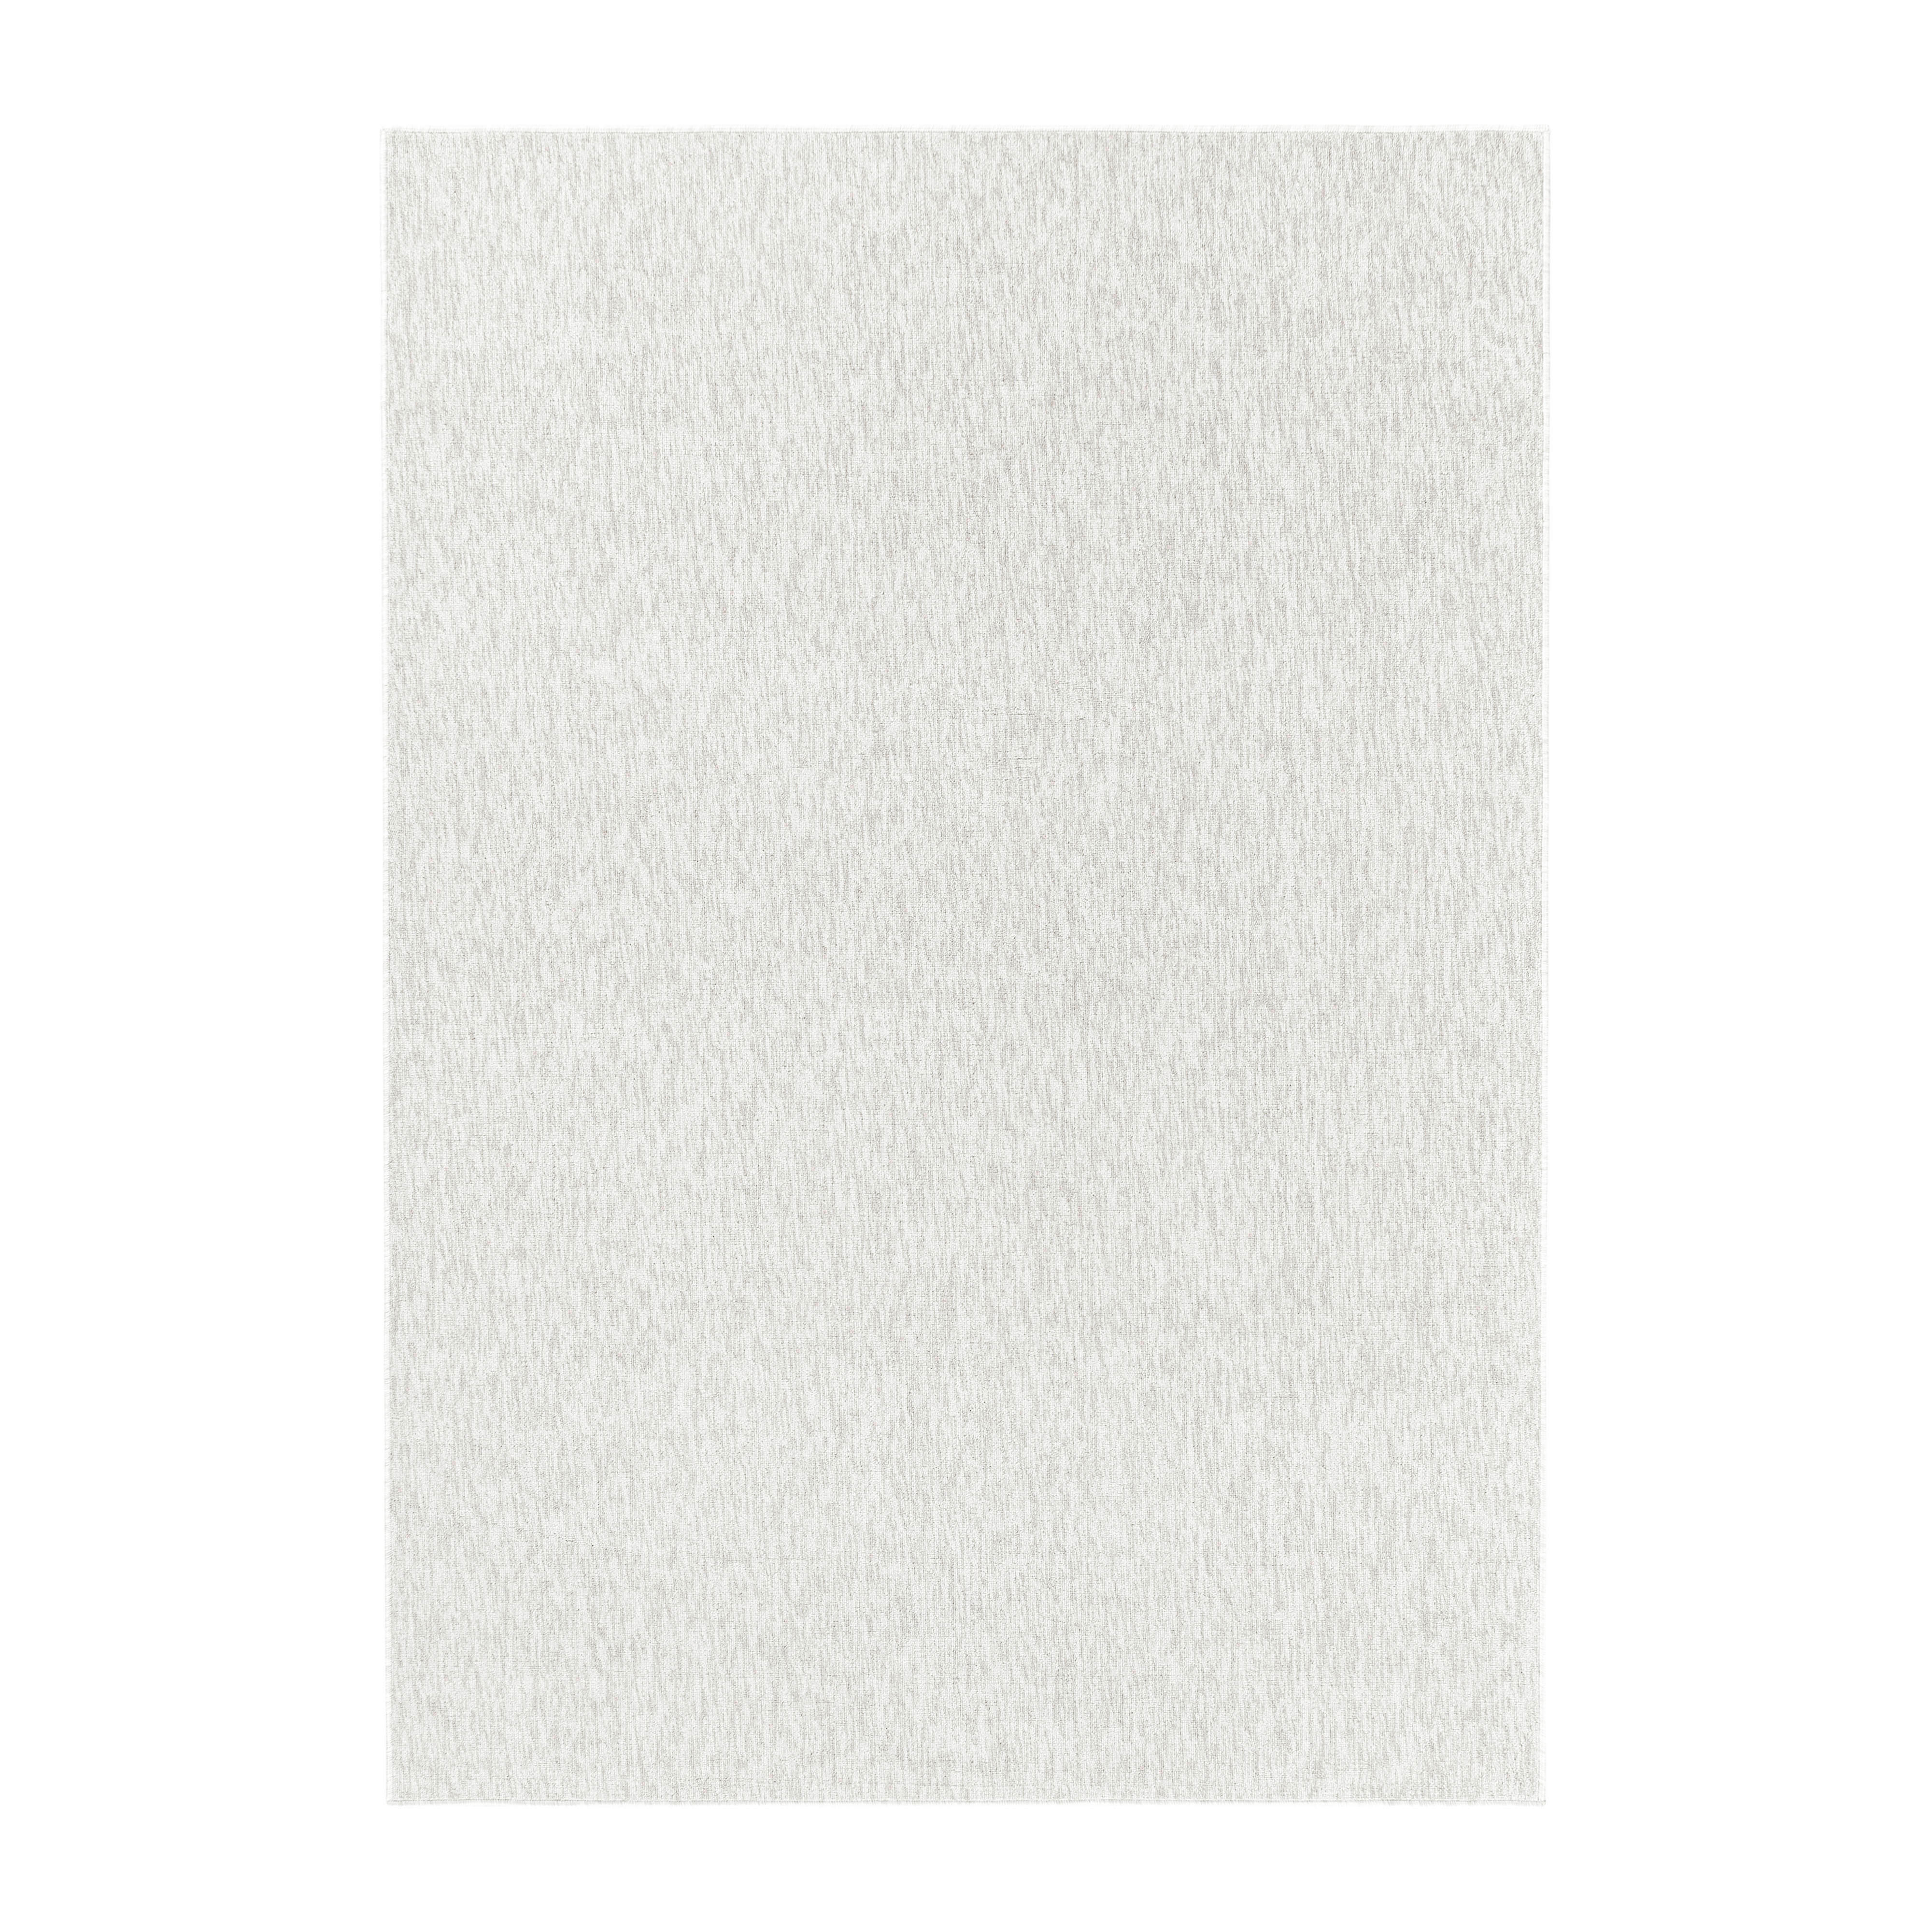 FLACHWEBETEPPICH 60/100 cm Nizza Creme  - Creme, KONVENTIONELL, Textil (60/100cm) - Novel